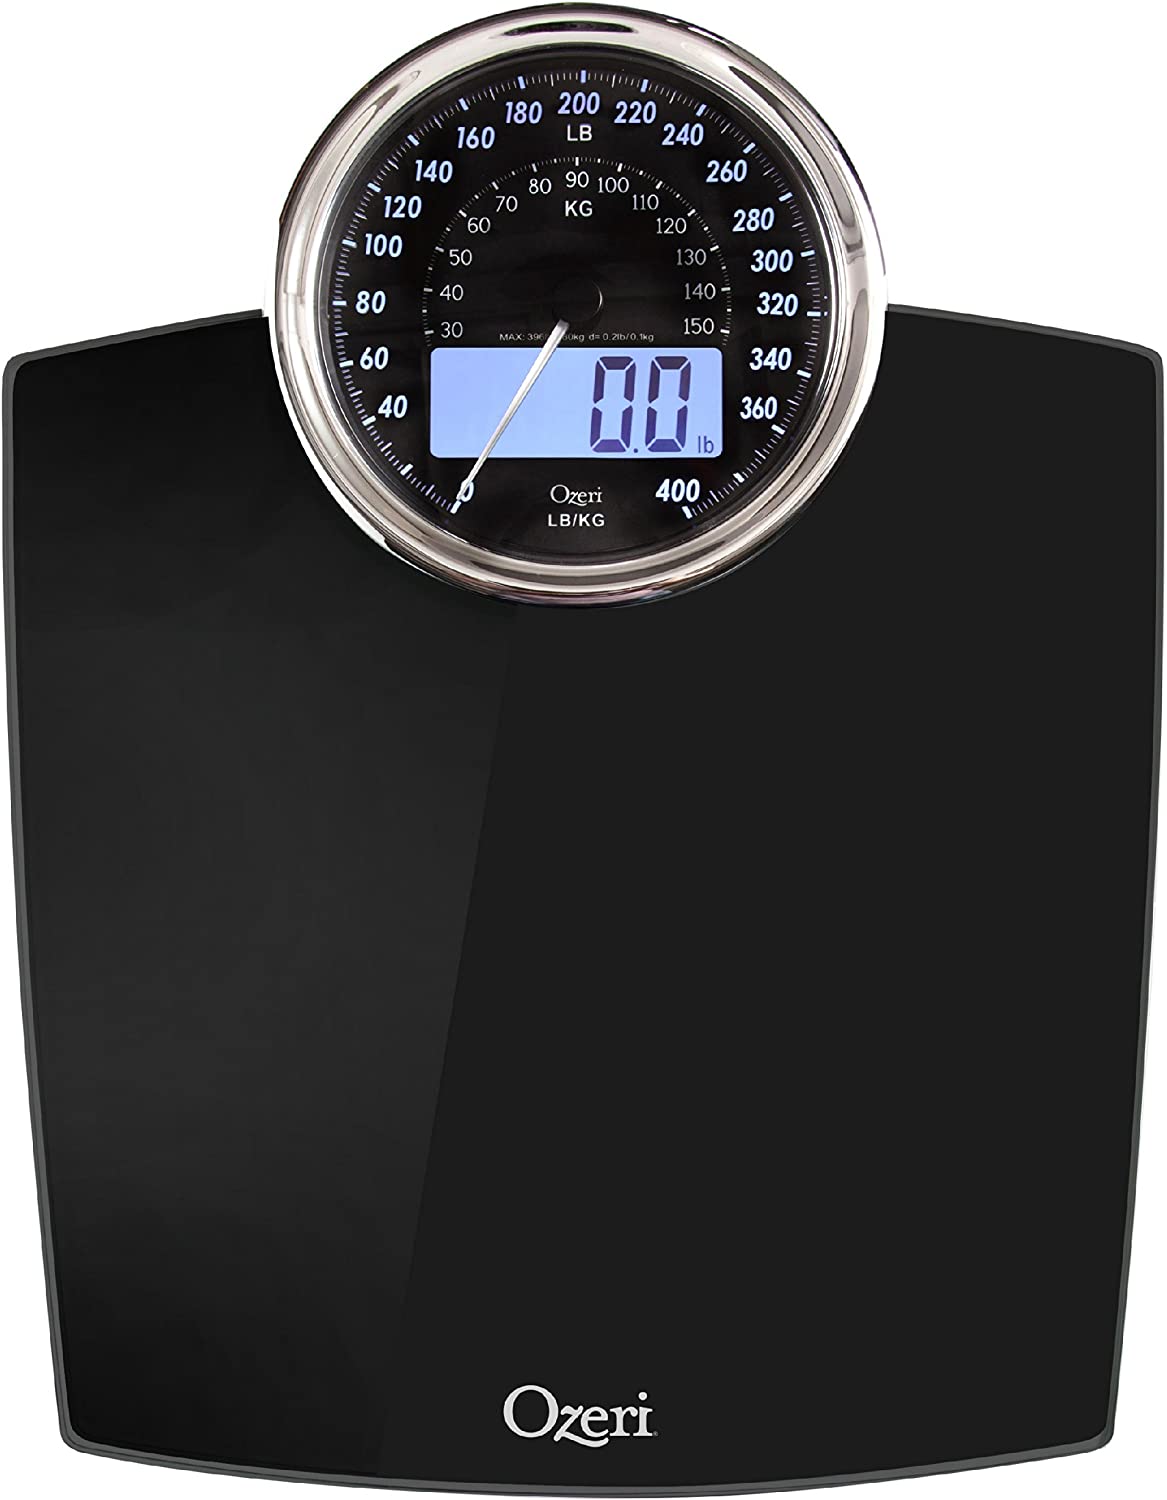 Ozeri Rev 400 lbs Bathroom Scale